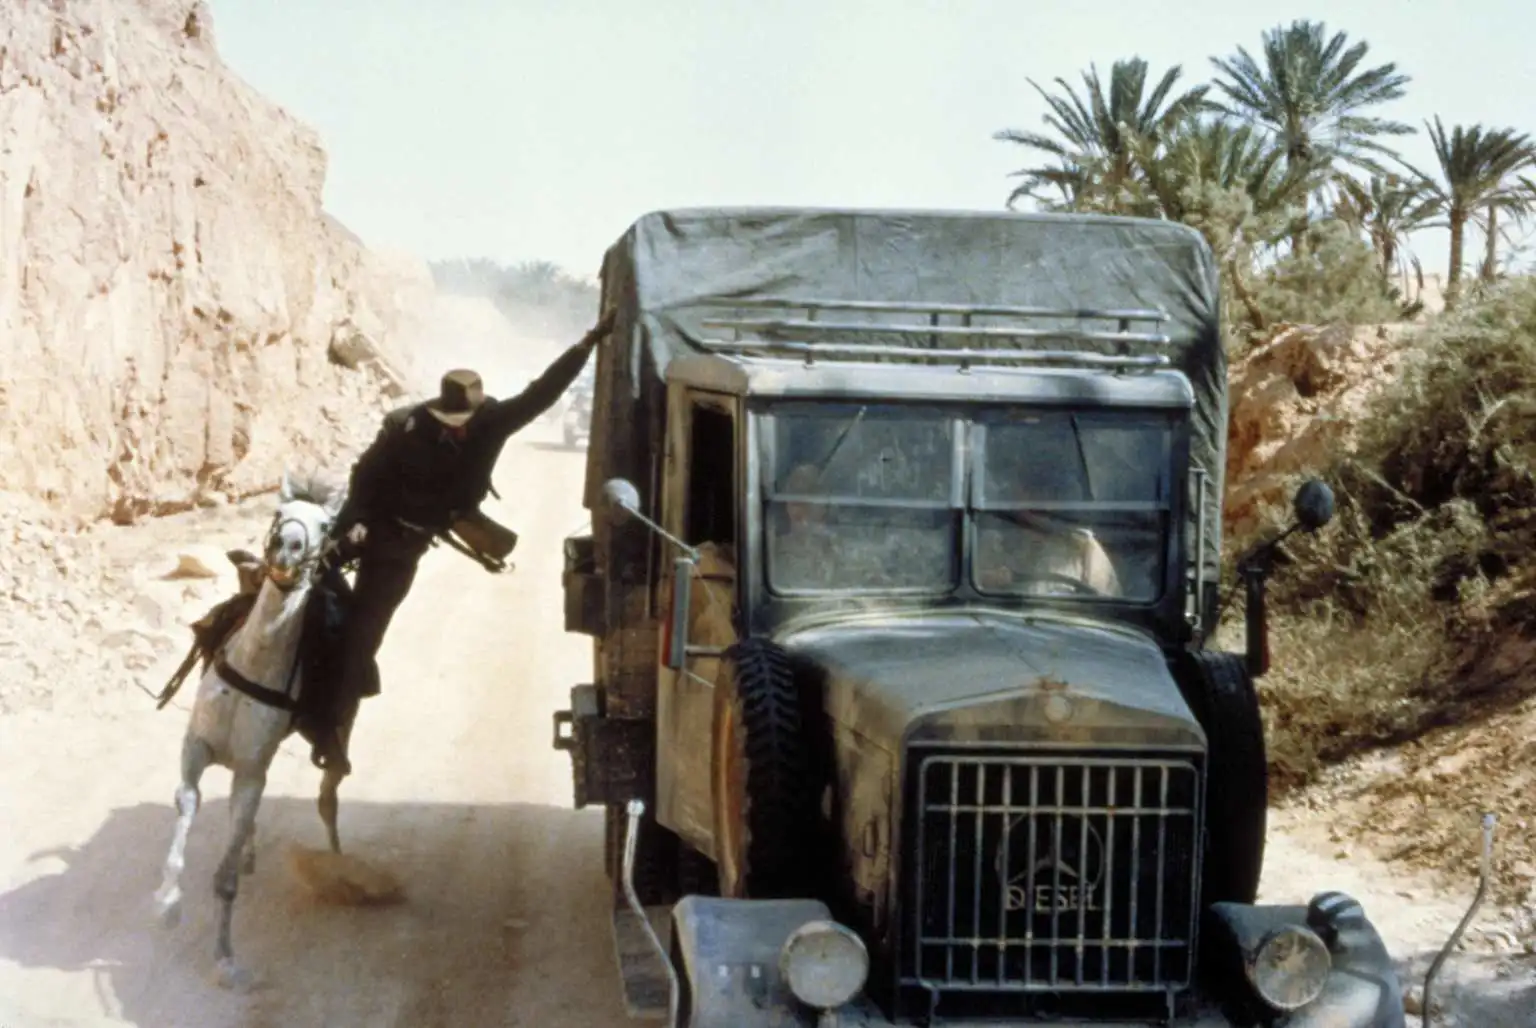 Indiana Jones Raiders of the Lost Ark Full Movie 123MOVIES: A Classic Adventure Film